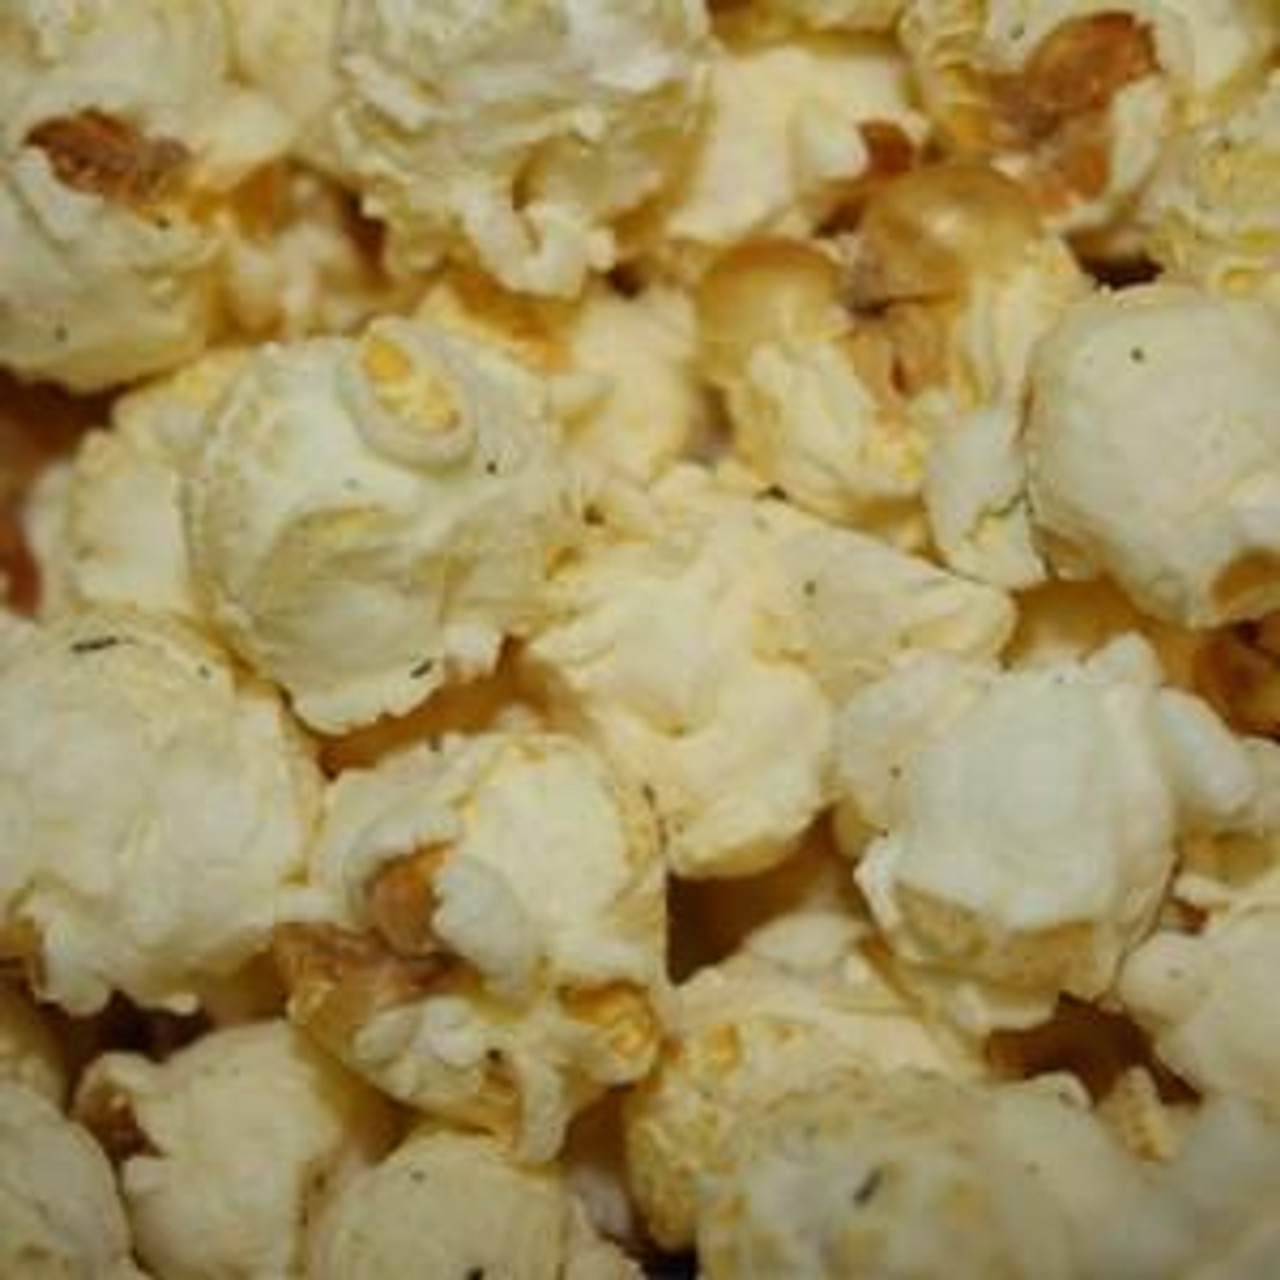 Sour Cream & Onion Popcorn Seasoning